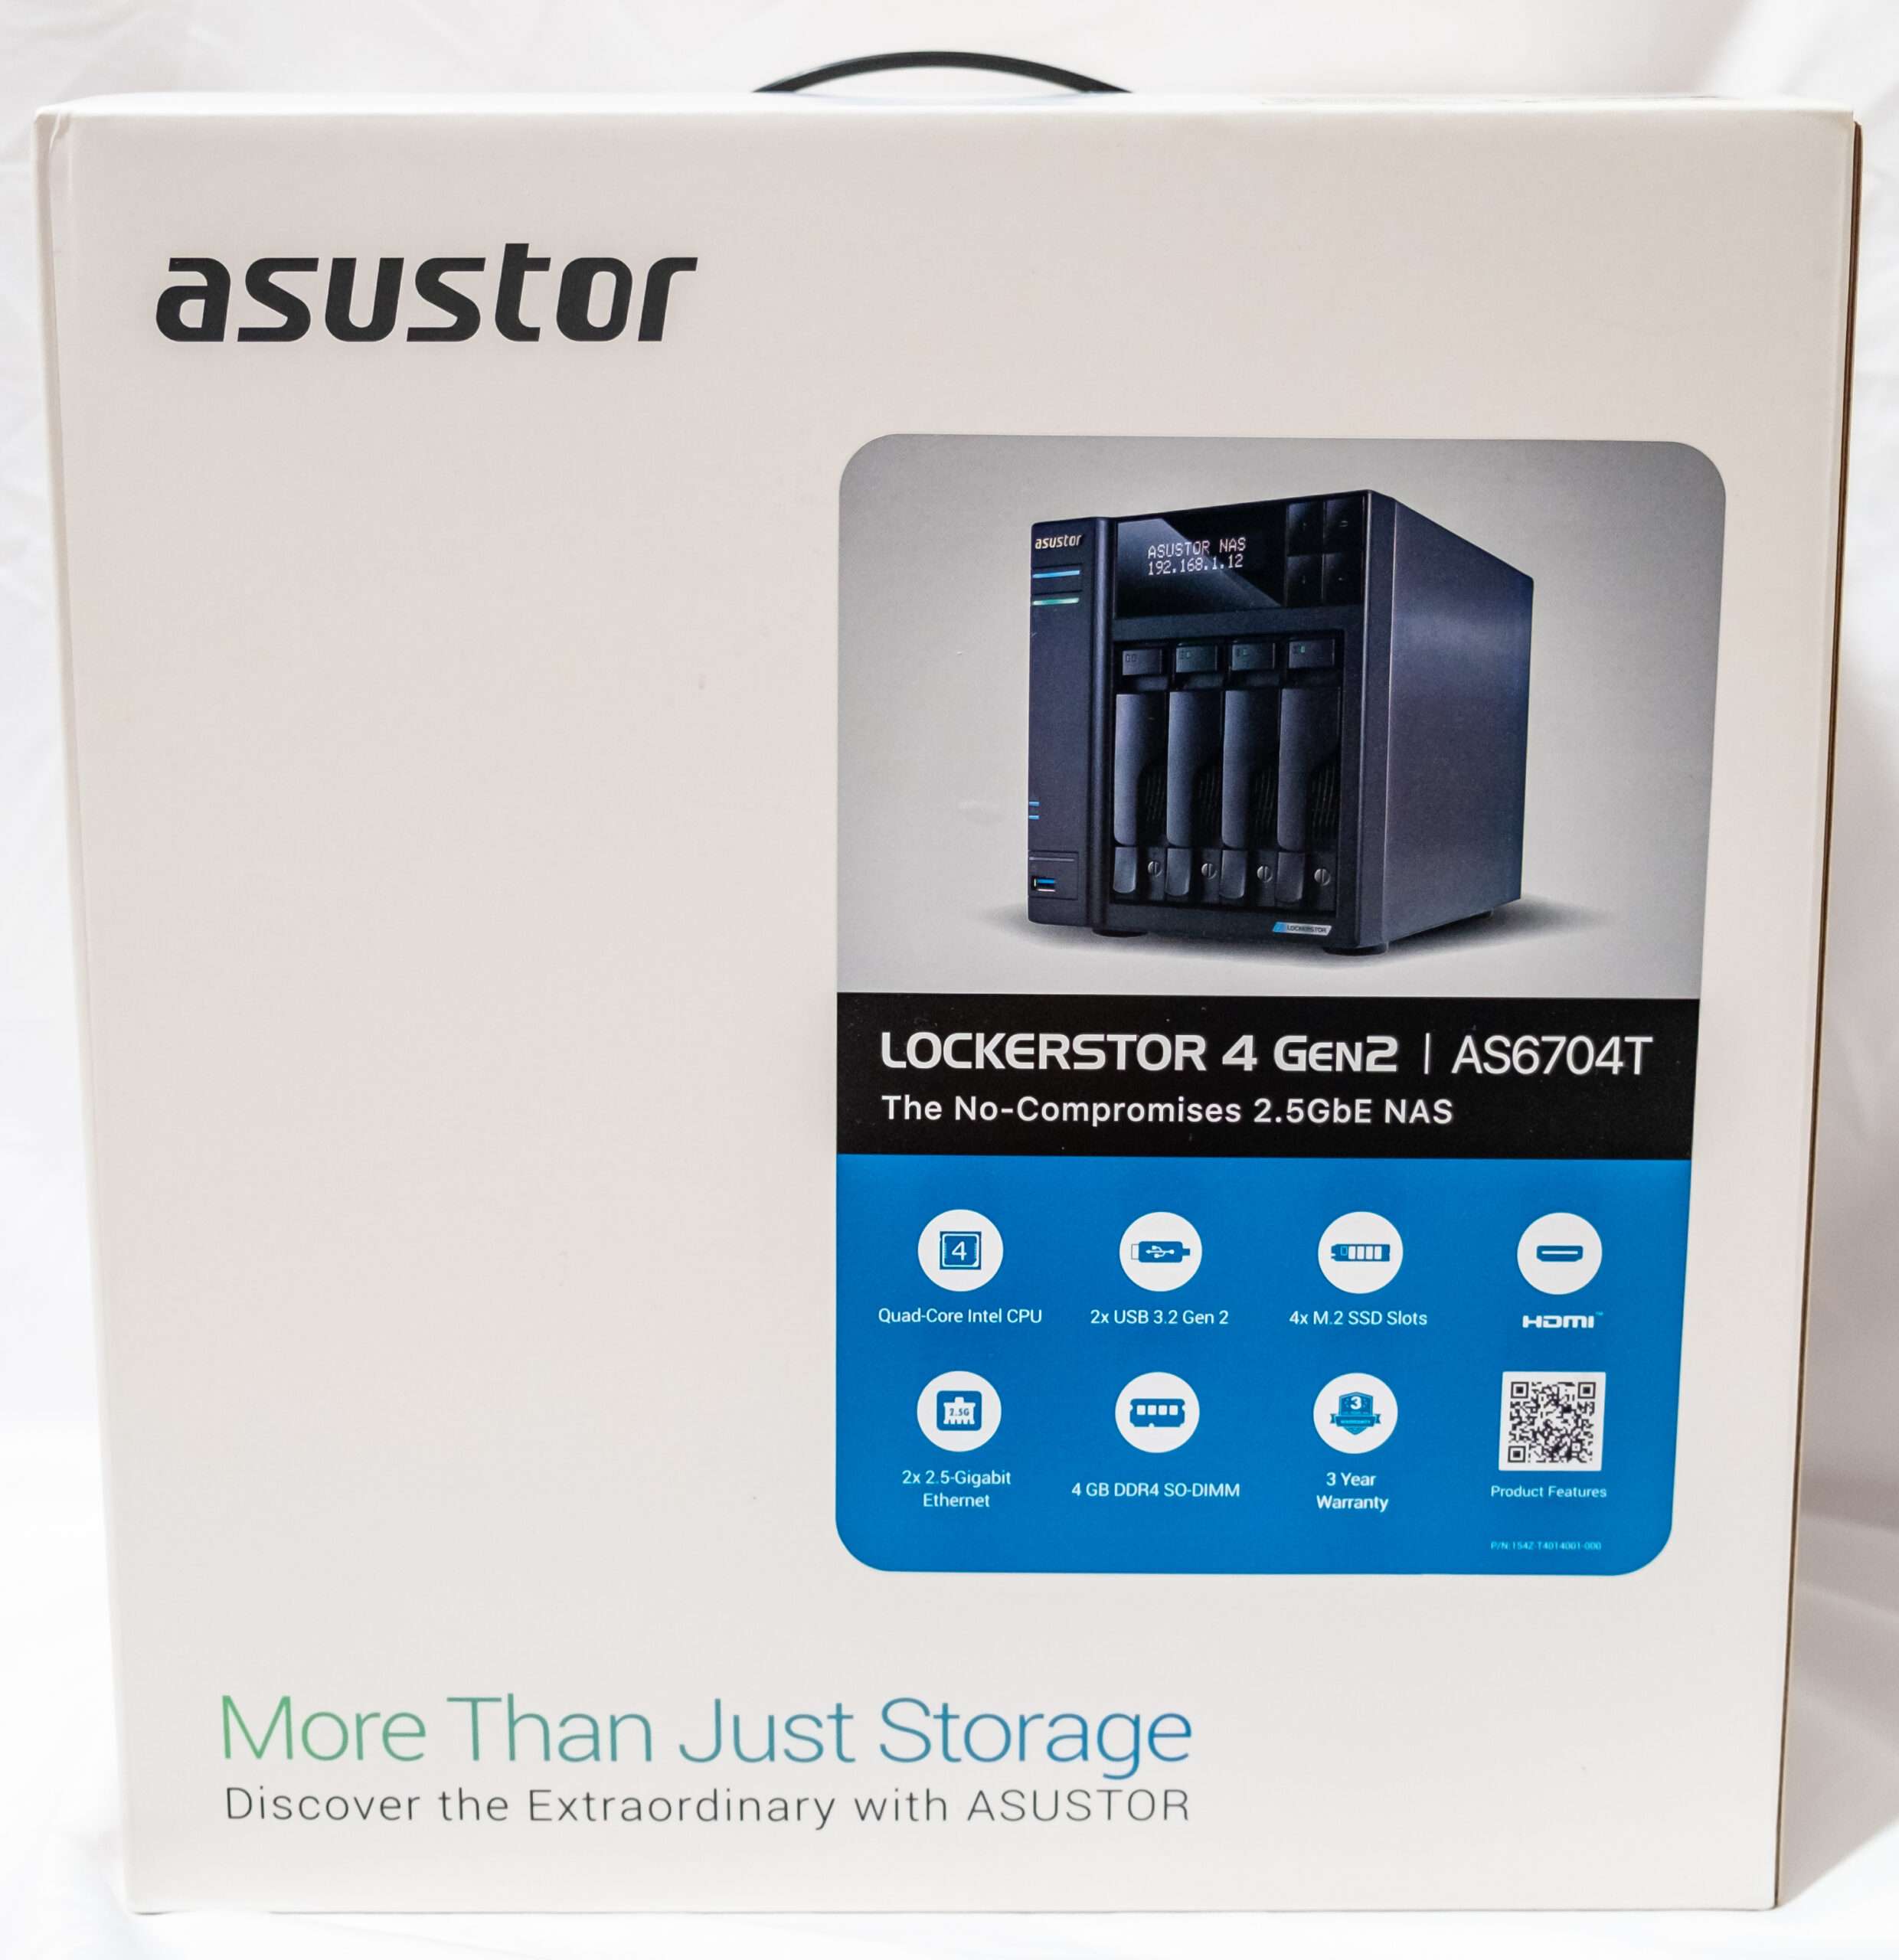 ASUSTOR Lockerstor 4 Gen2 (AS6704T) NAS Review